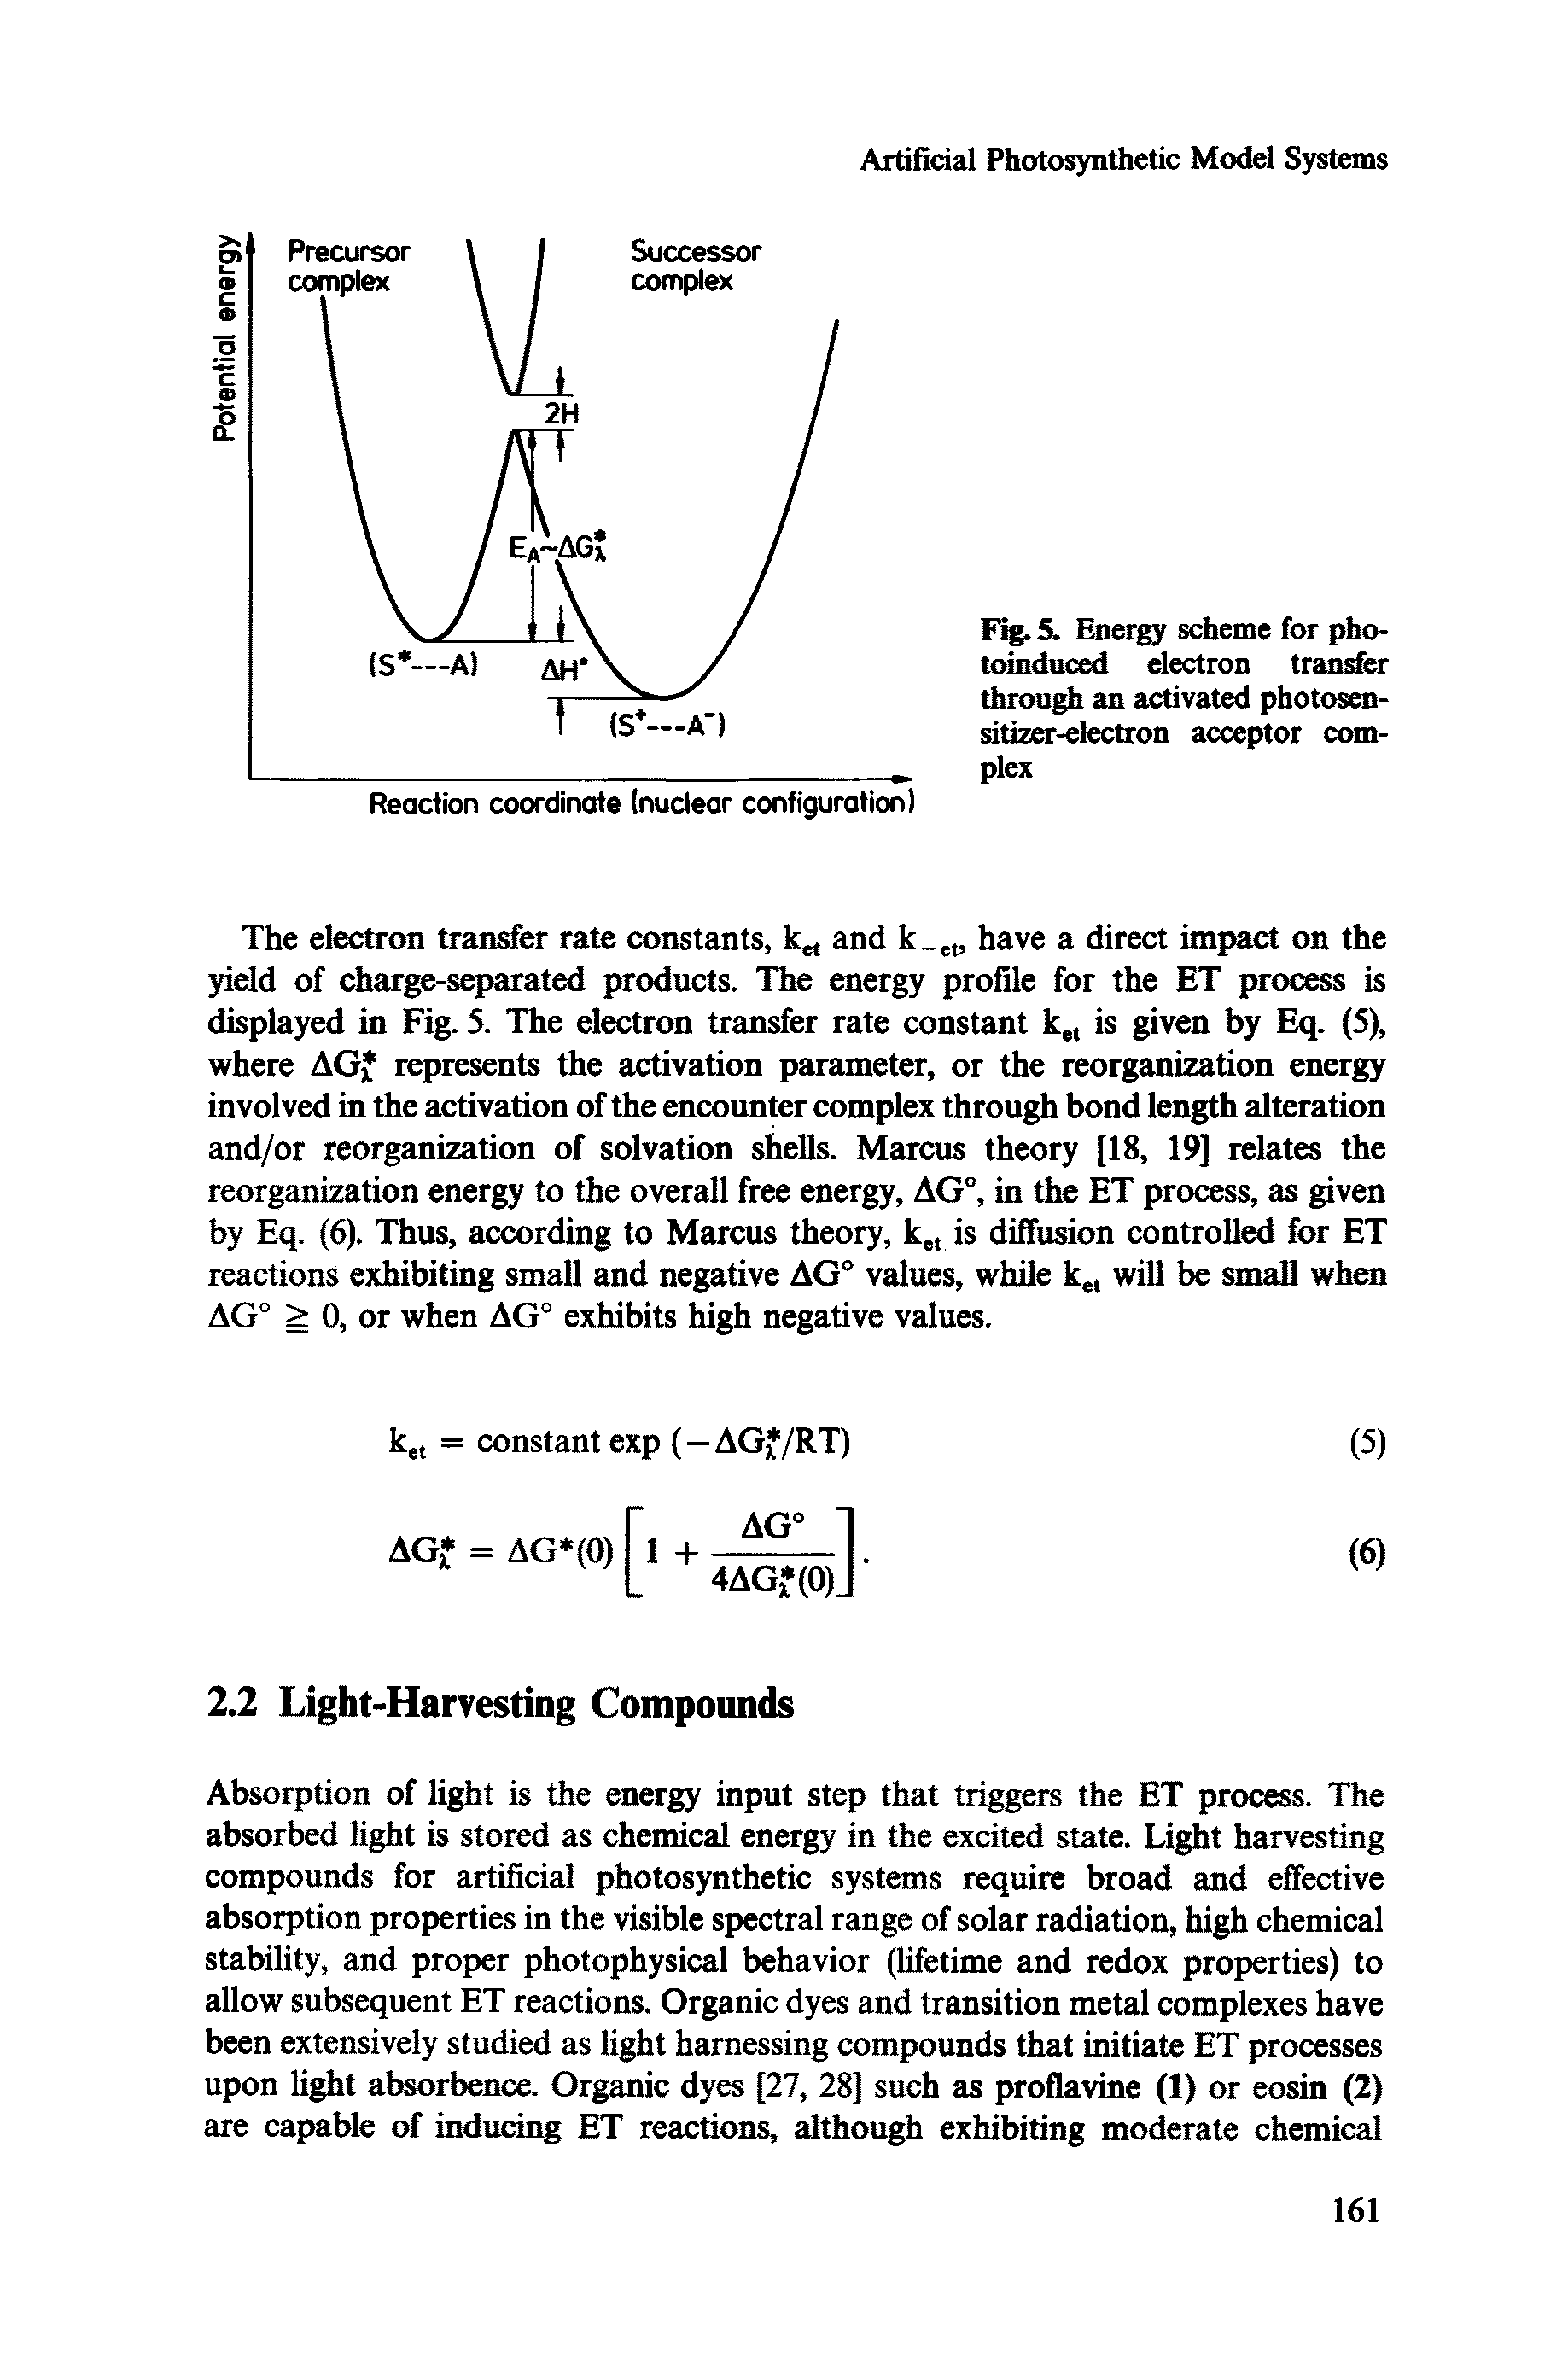 Fig. 5. Energy scheme for pho-toinduced electron transfer through an activated photosensitizer-electron acceptor complex...